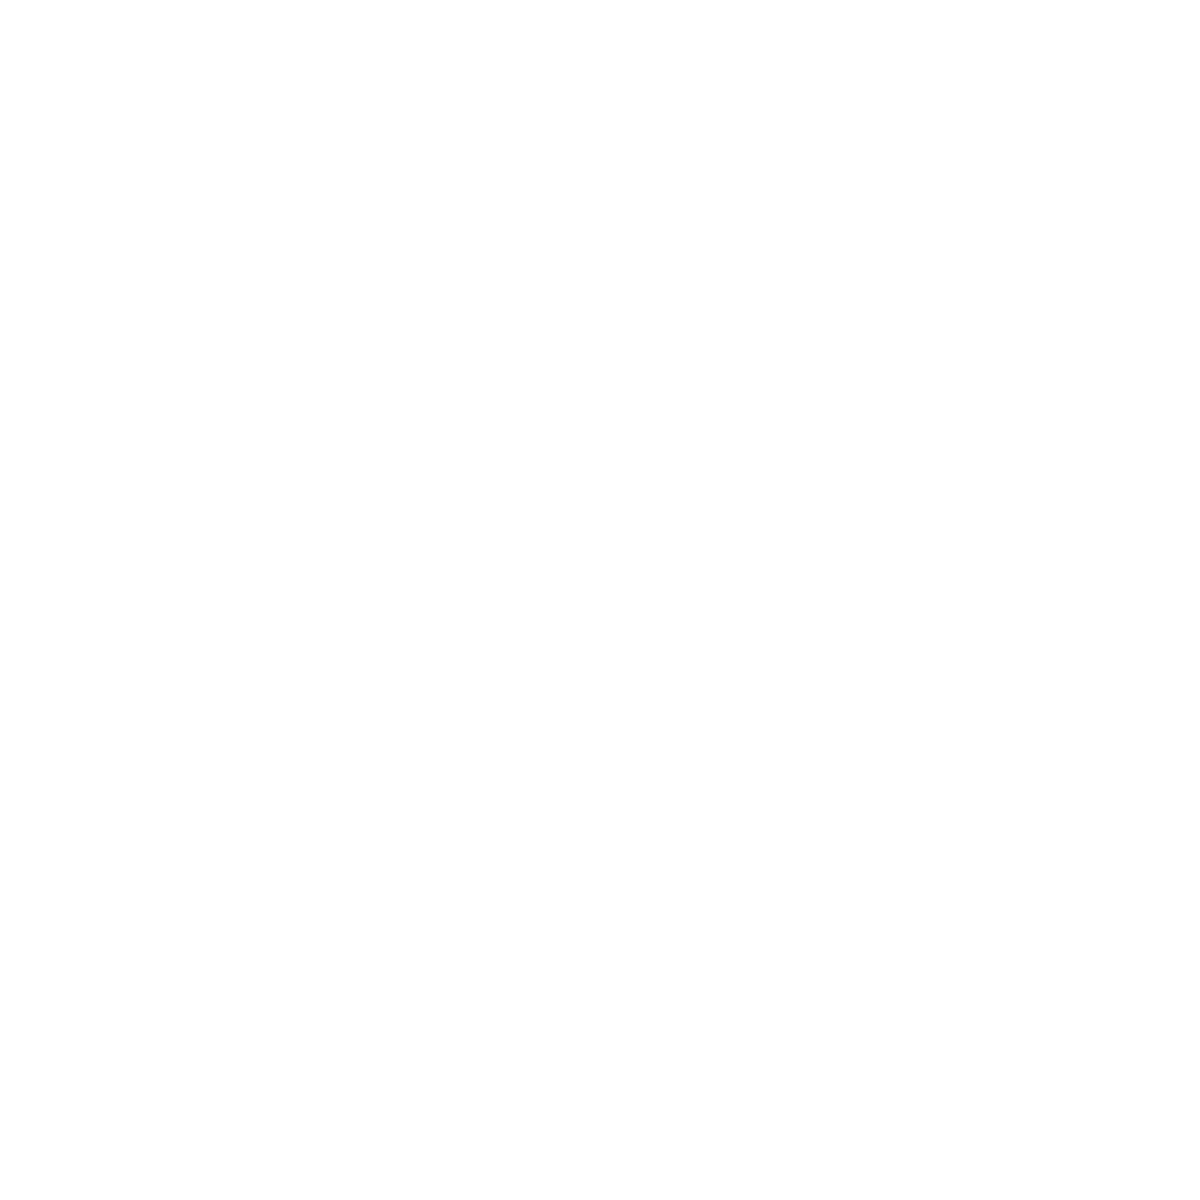 HoneySeed Photo & Film